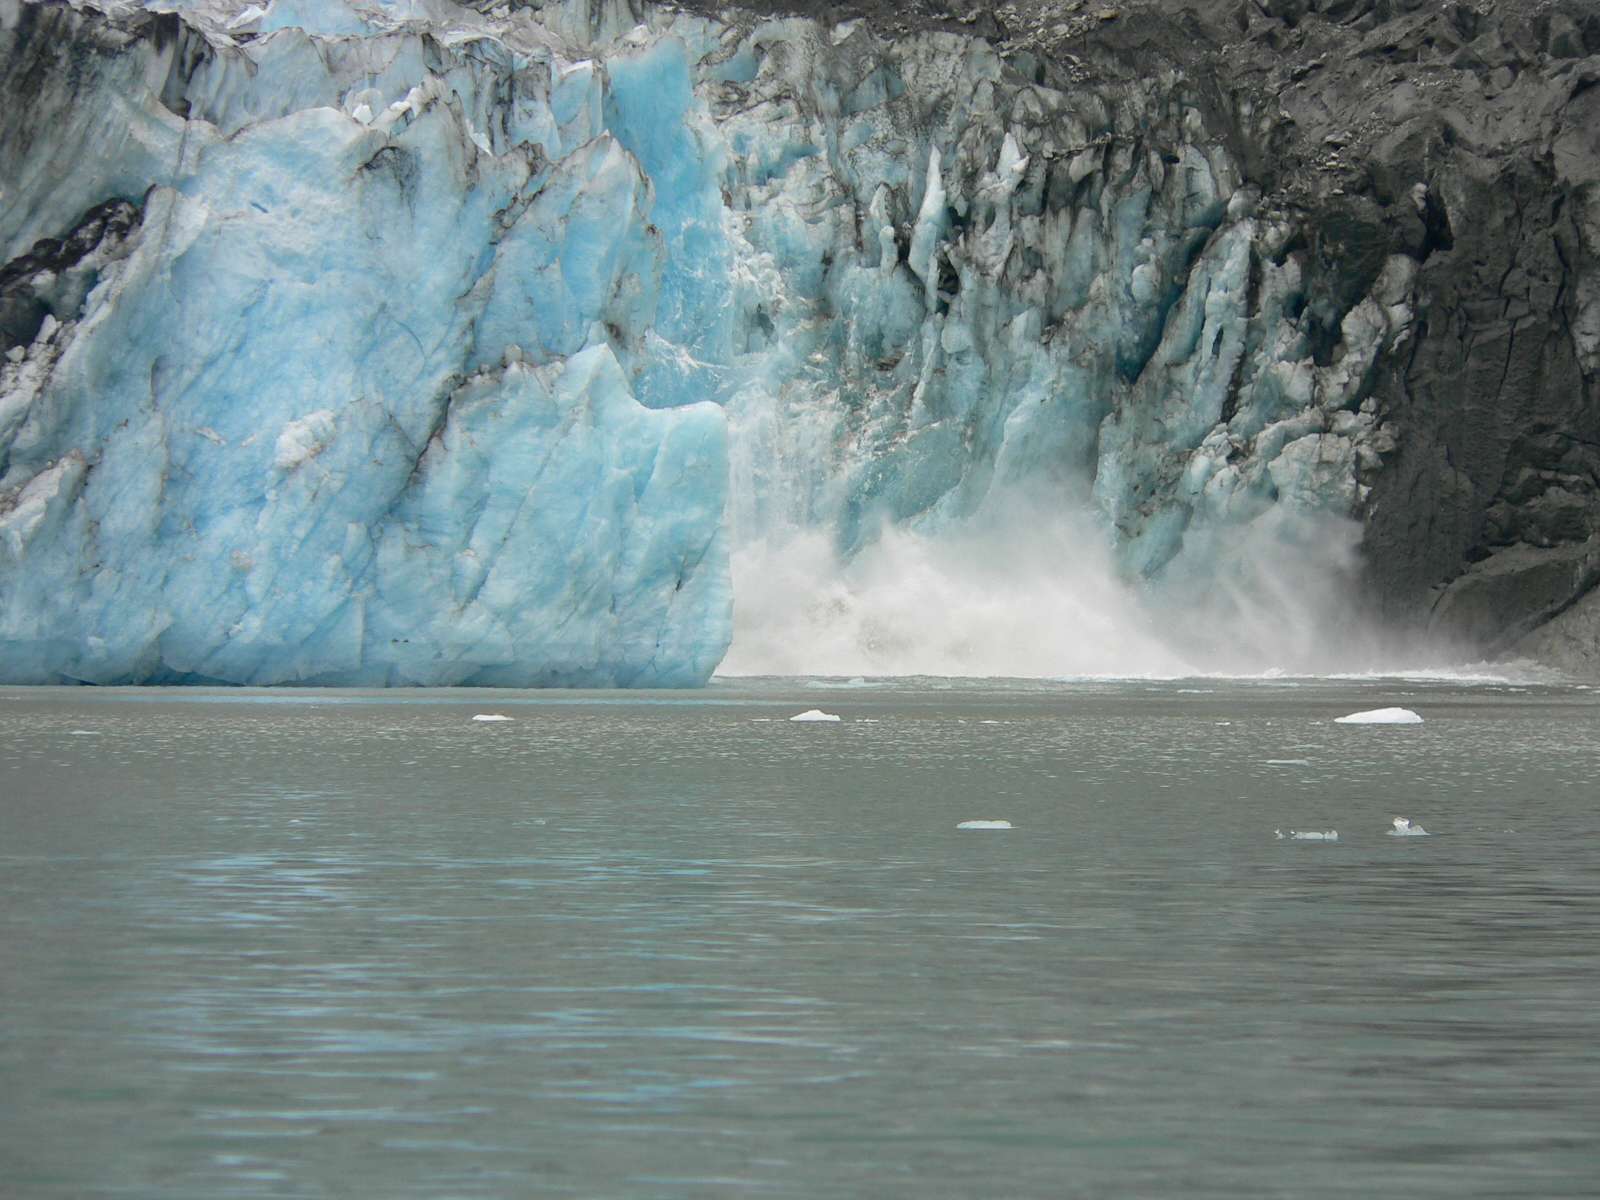 Calving glacier in Alaska